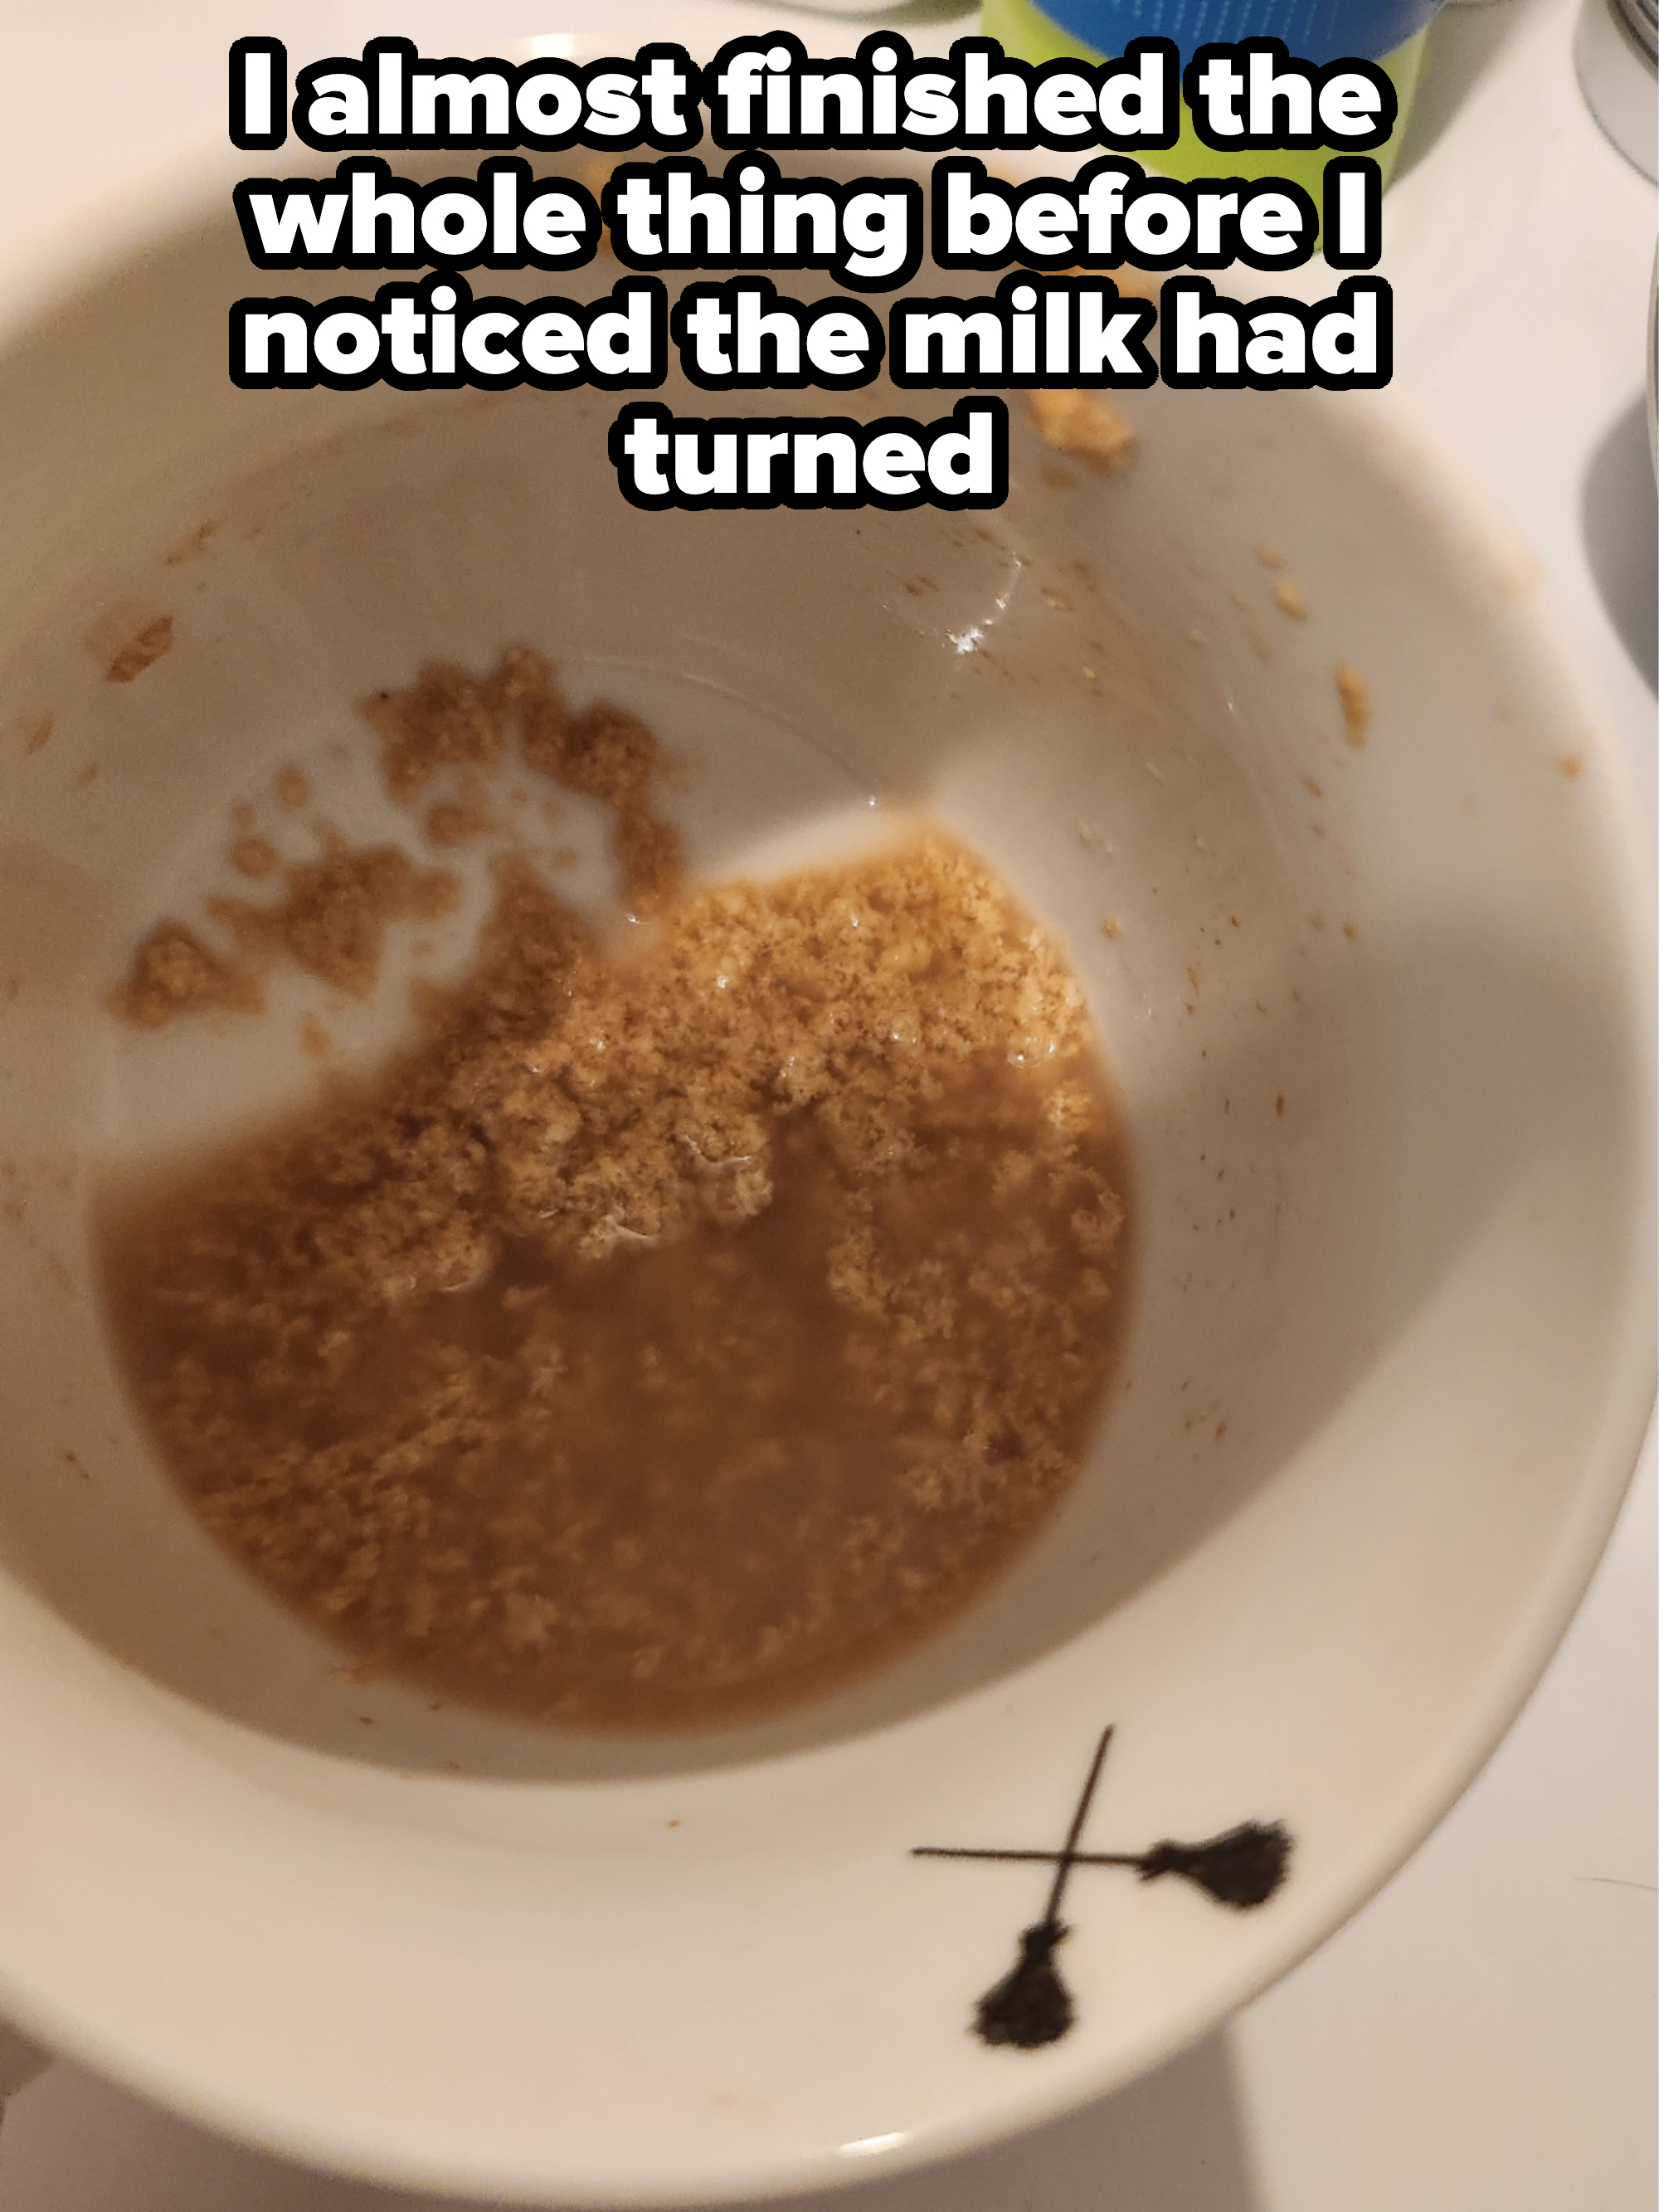 Bad milk in a cup of tea